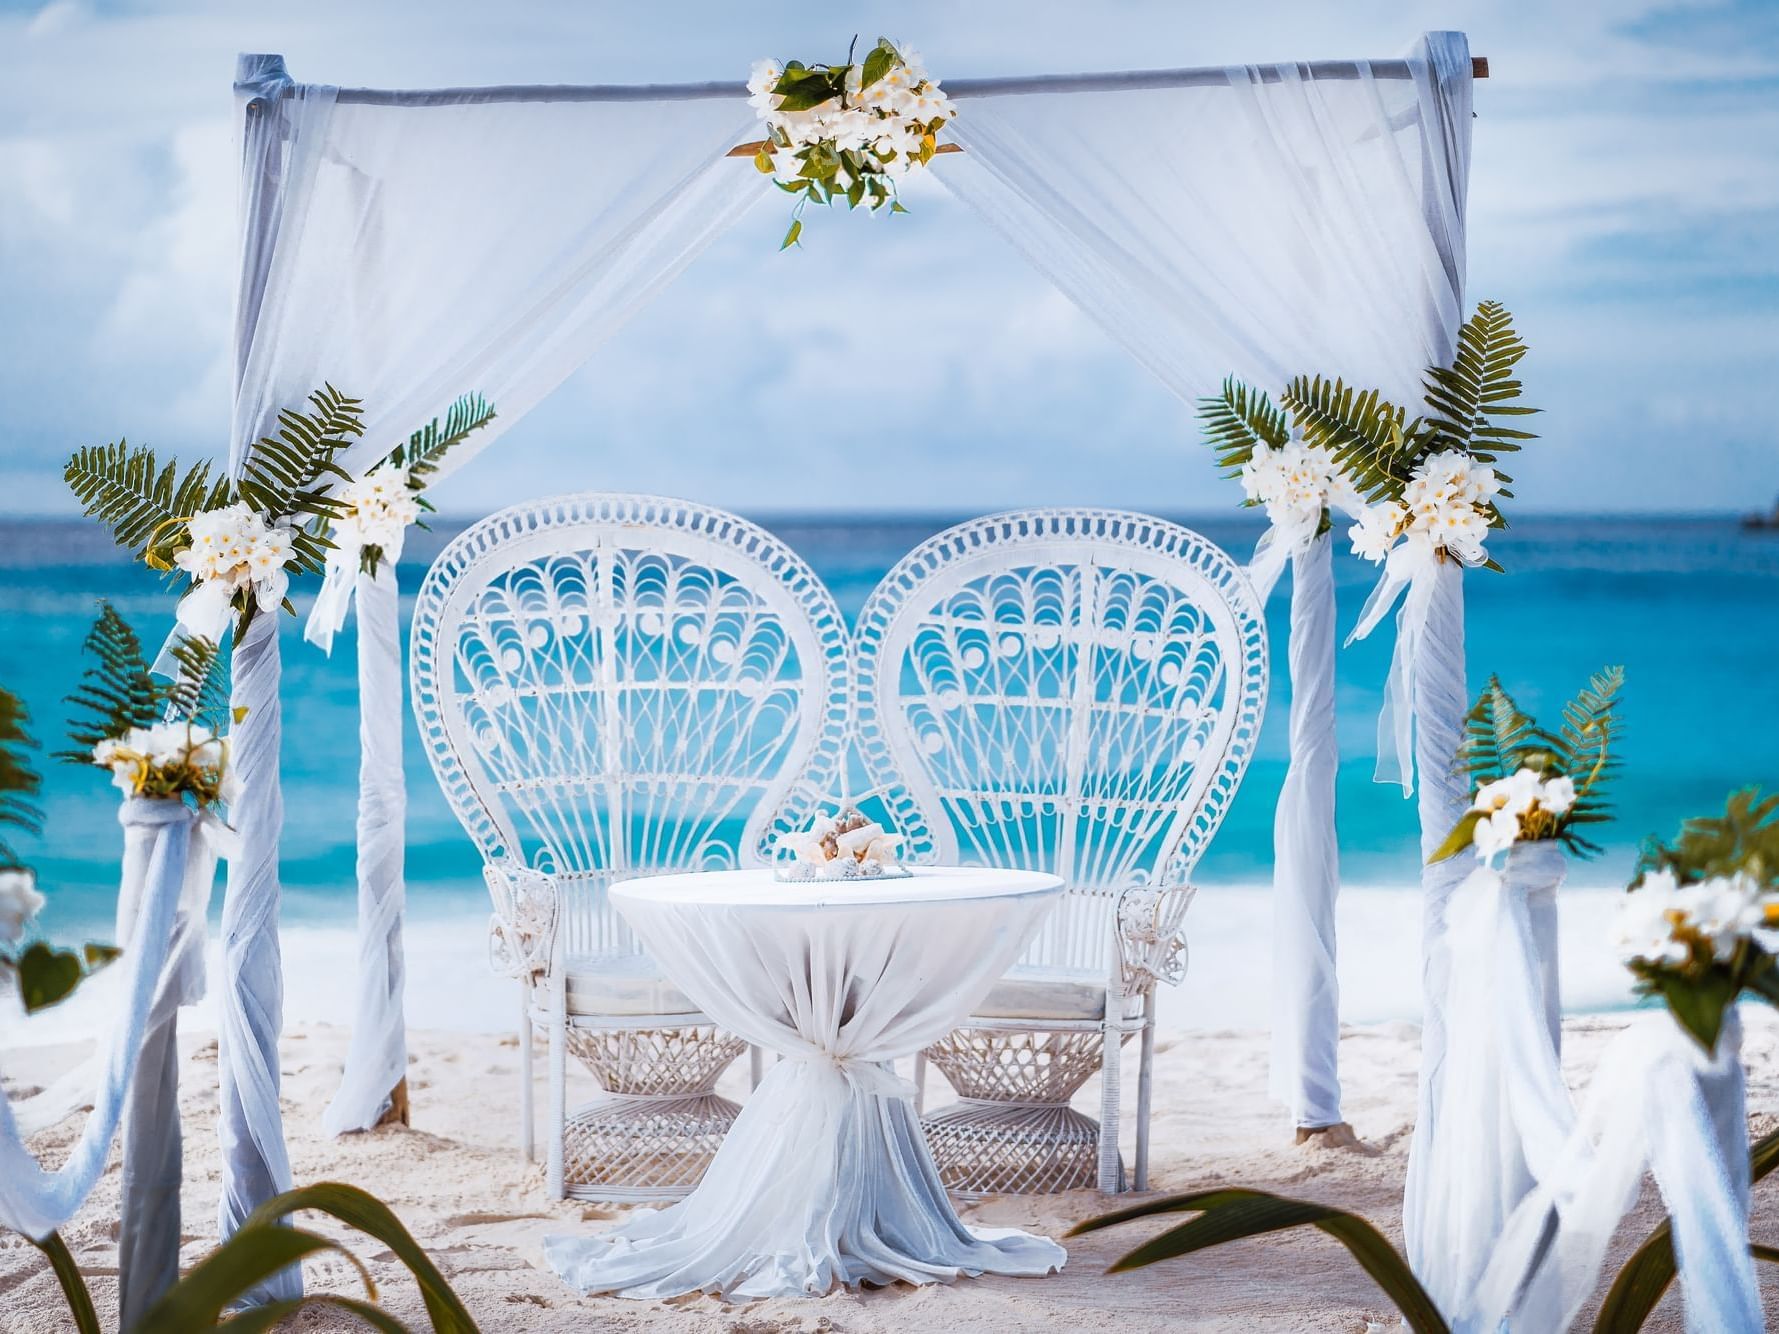 Wedding ceremony décor by the beach at Daydream Island Resort